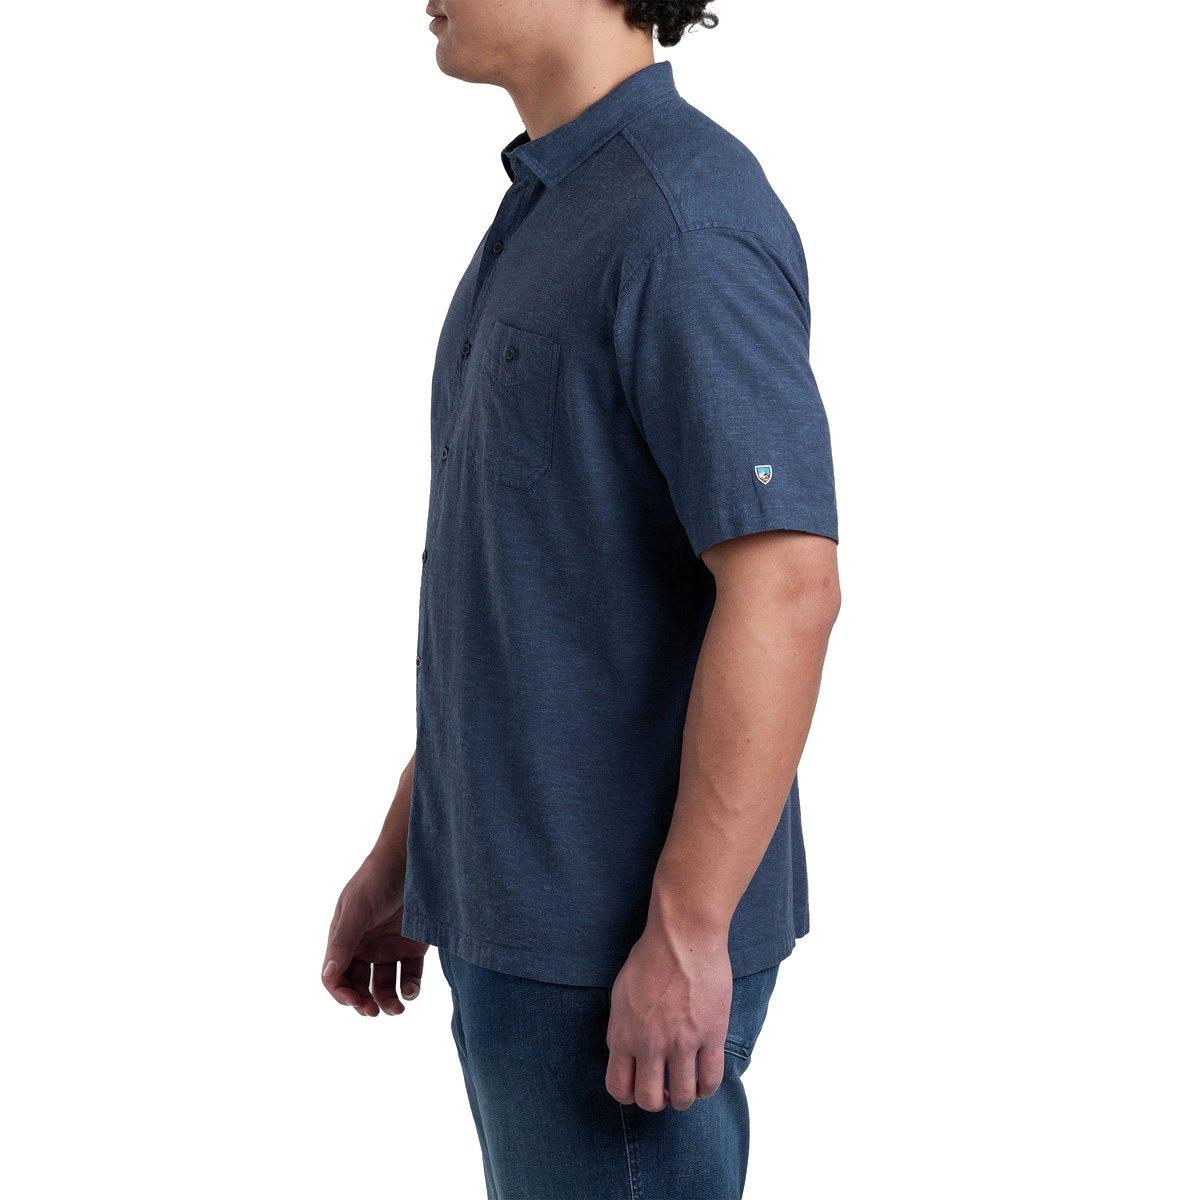 Kuhl Men's Getaway Short-Sleeve Shirt - Blue